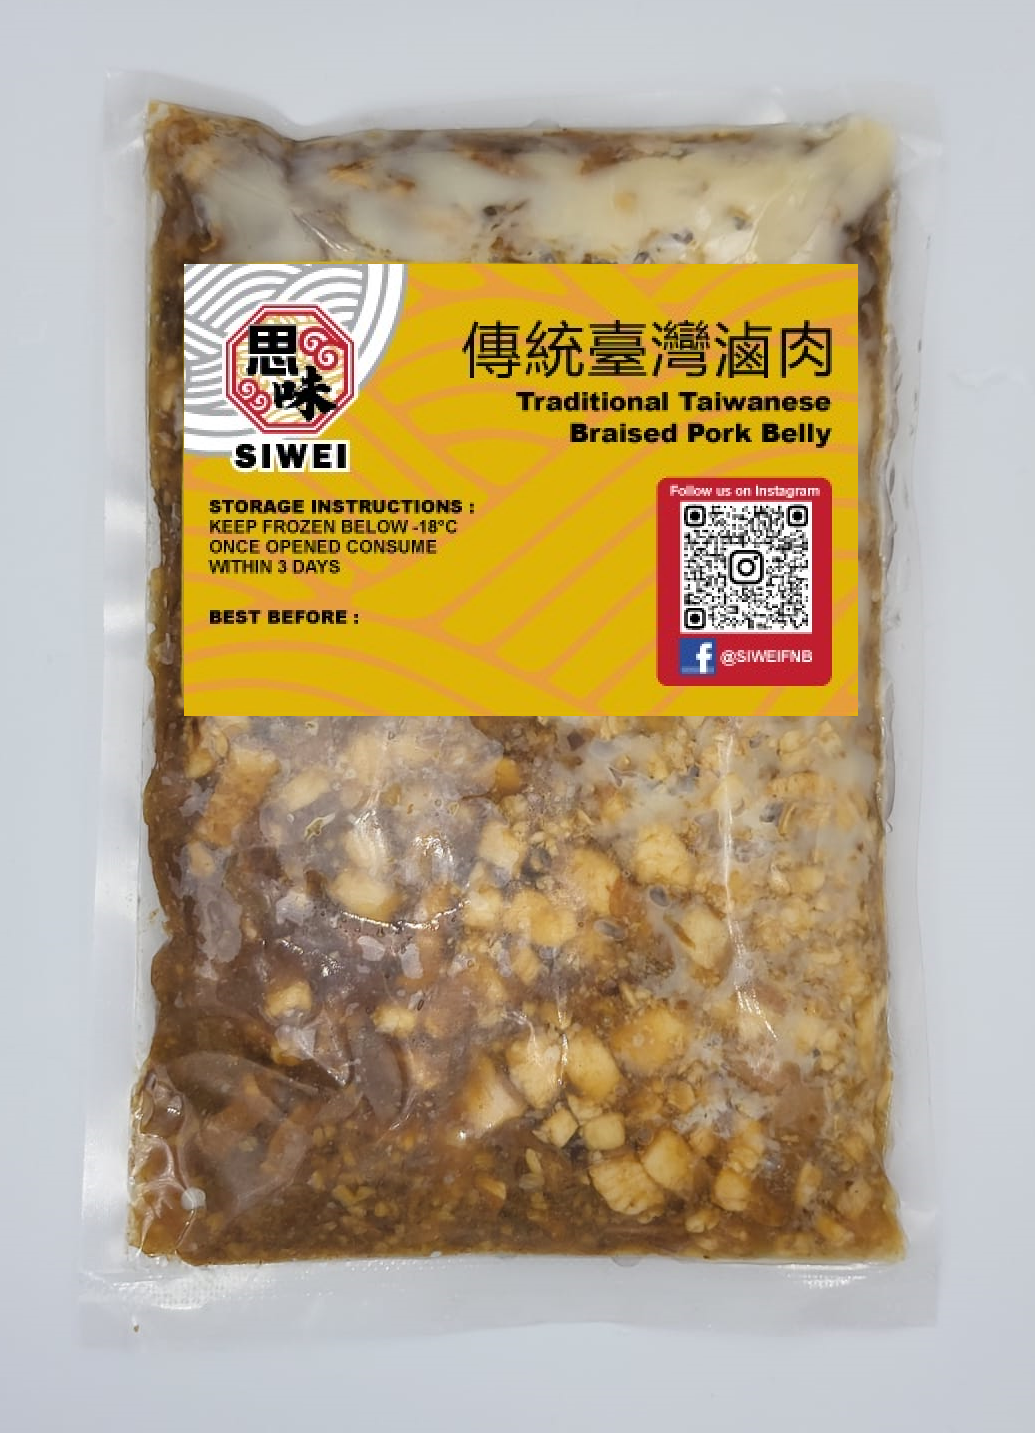 Siwei Traditional Taiwanese Braised Pork Belly (思味传统台湾卤肉) 500g